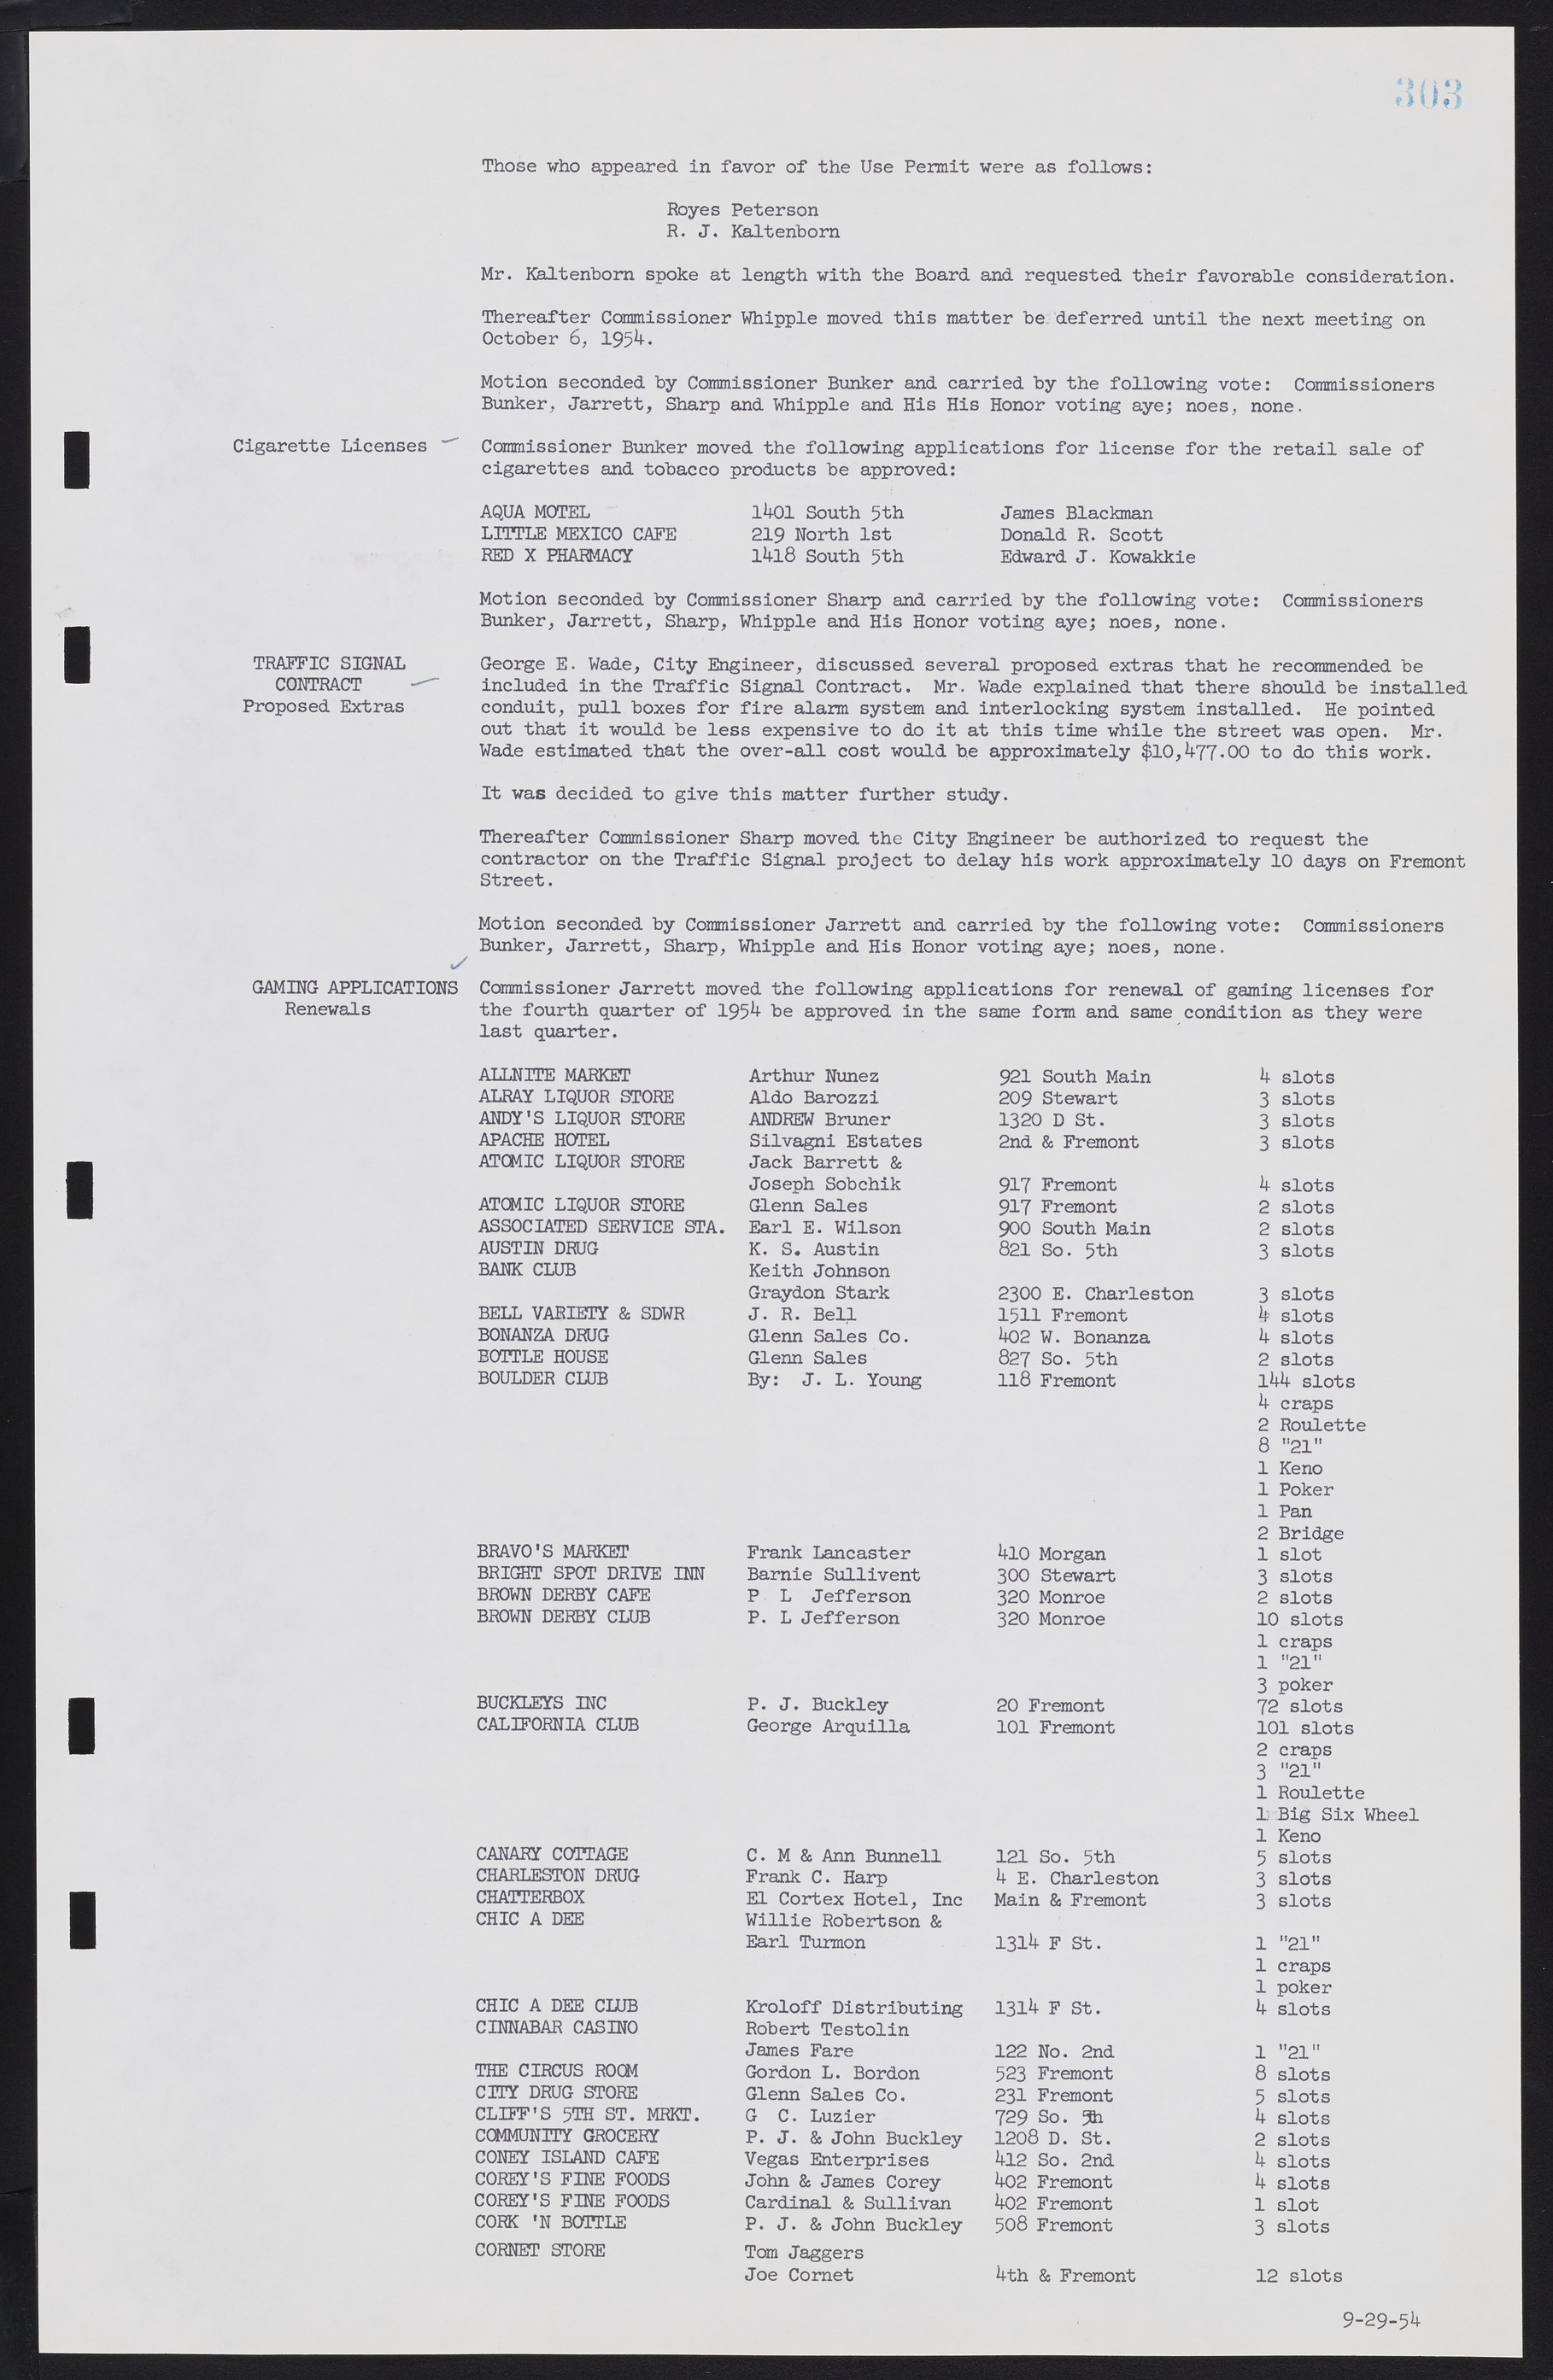 Las Vegas City Commission Minutes, February 17, 1954 to September 21, 1955, lvc000009-309